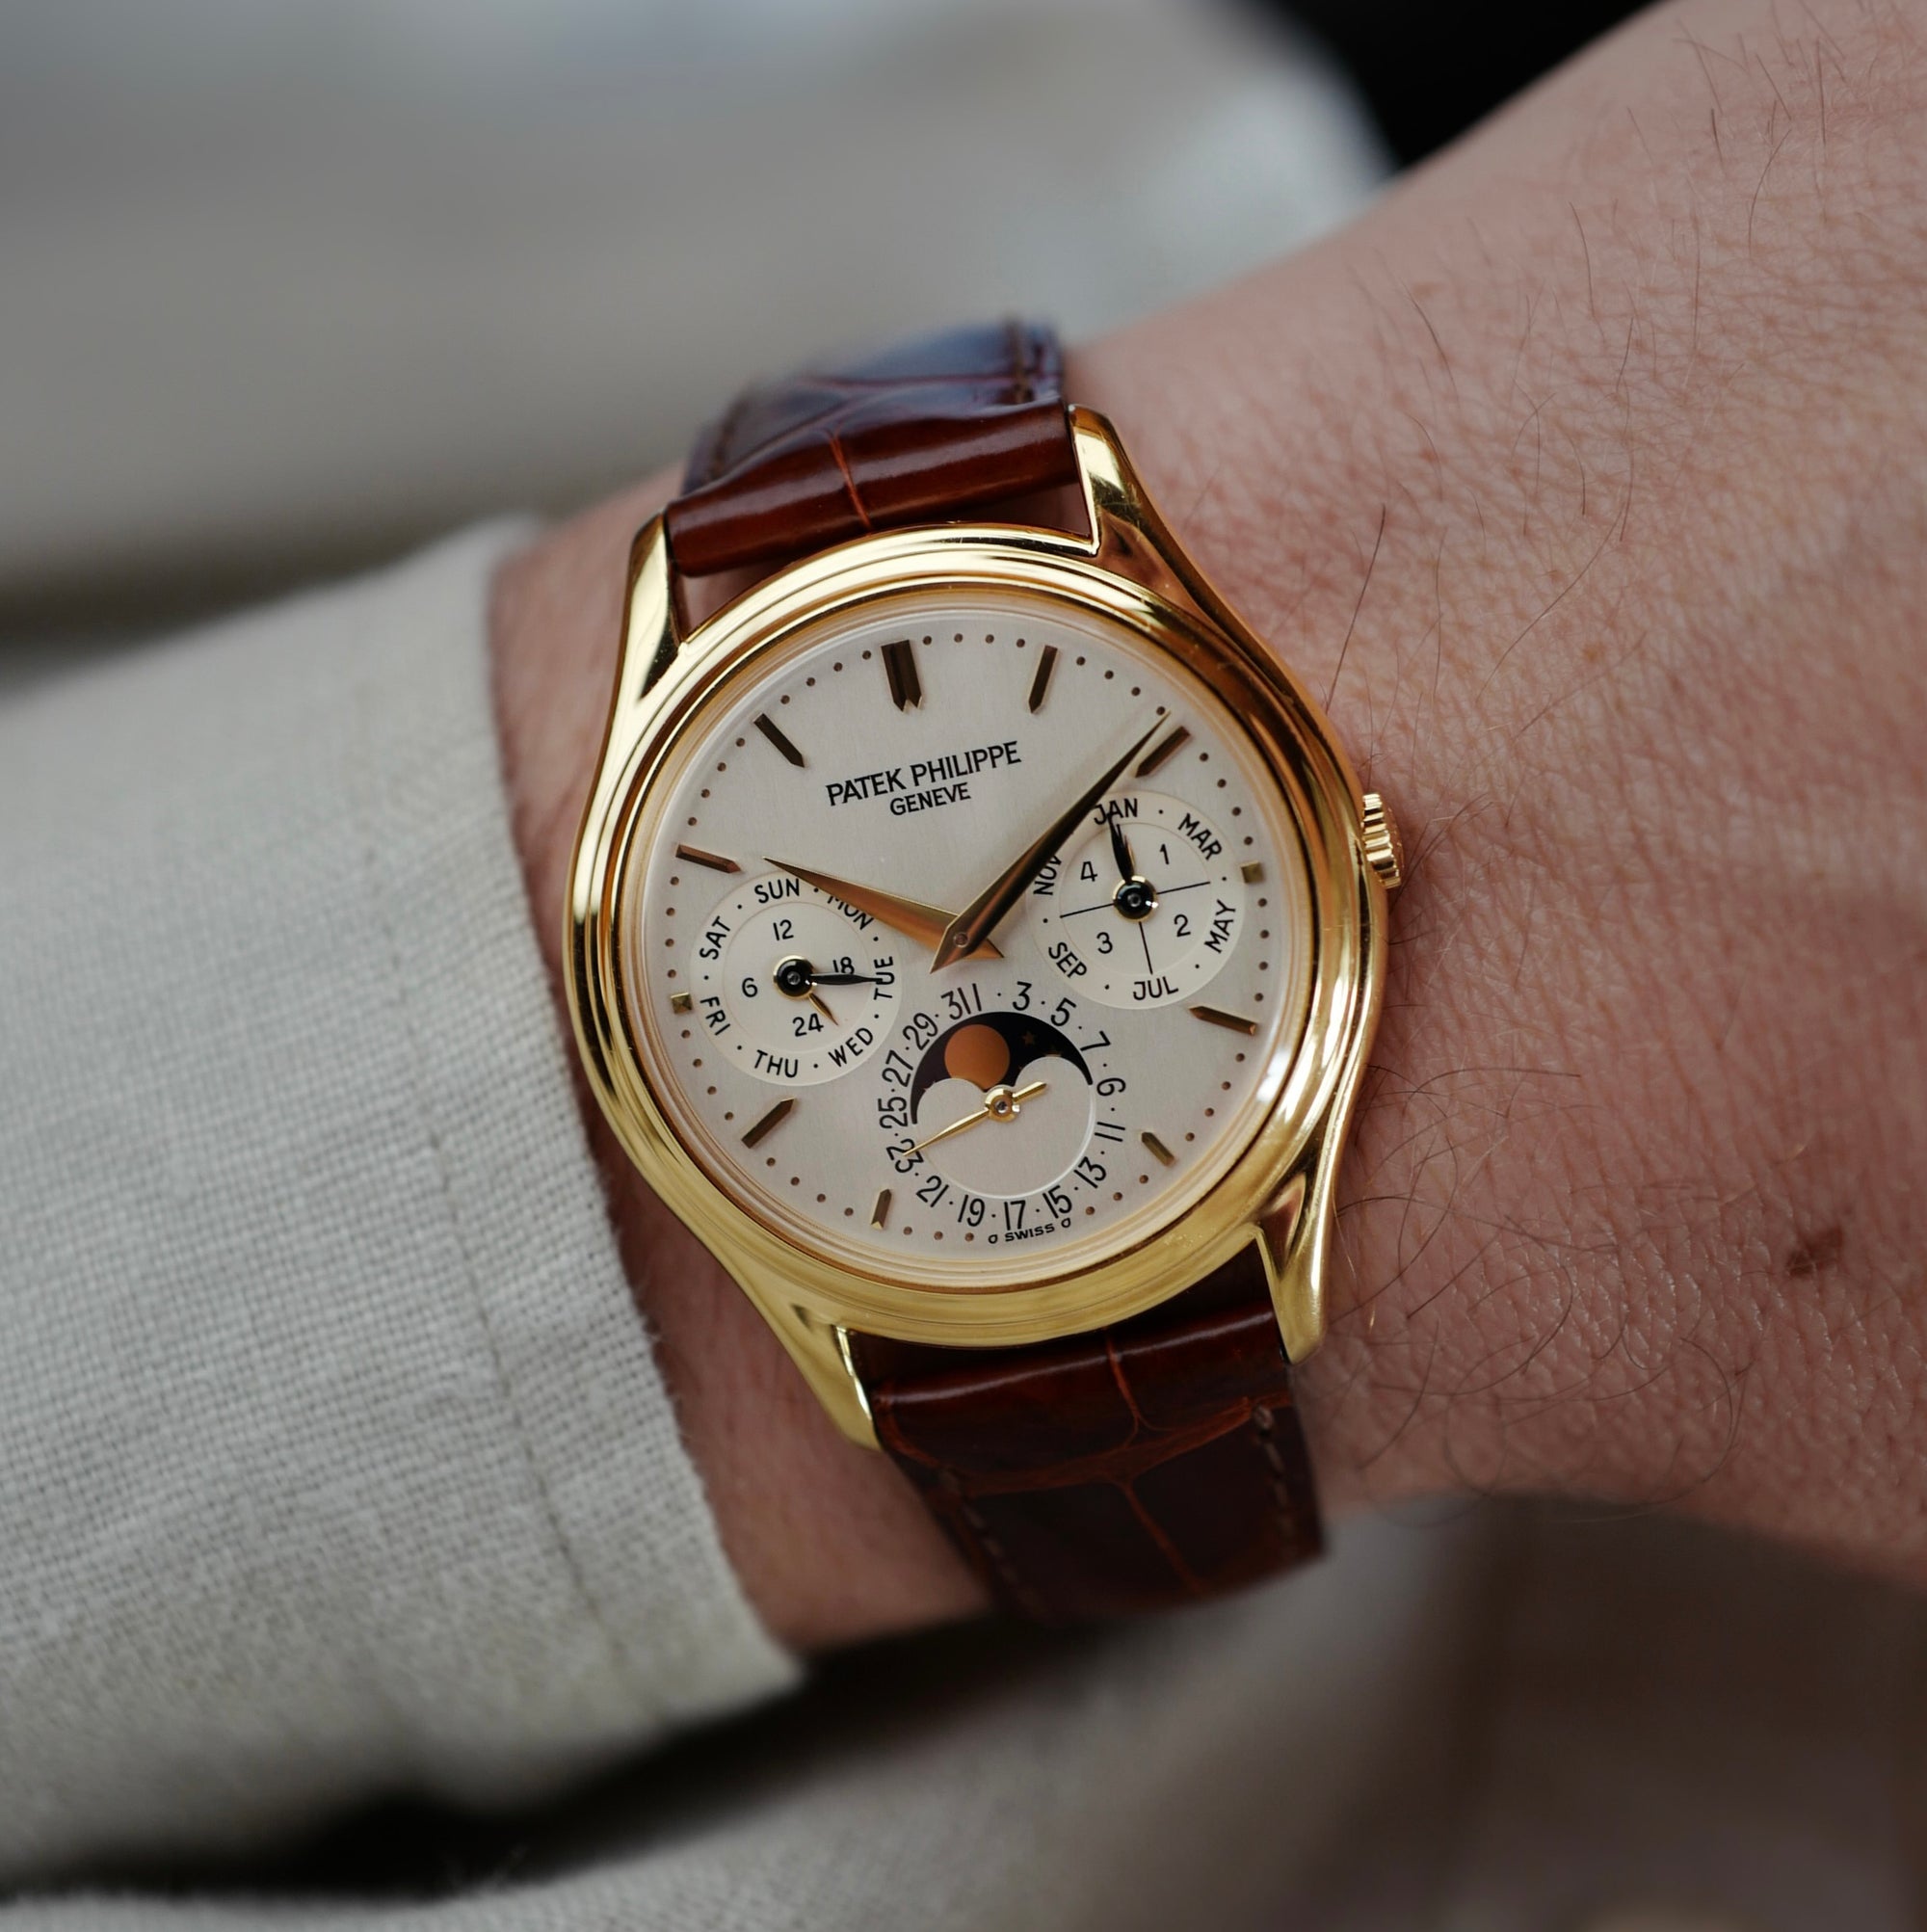 Patek Philippe - Patek Philippe Yellow Gold Perpetual Calendar Ref. 3940 - The Keystone Watches